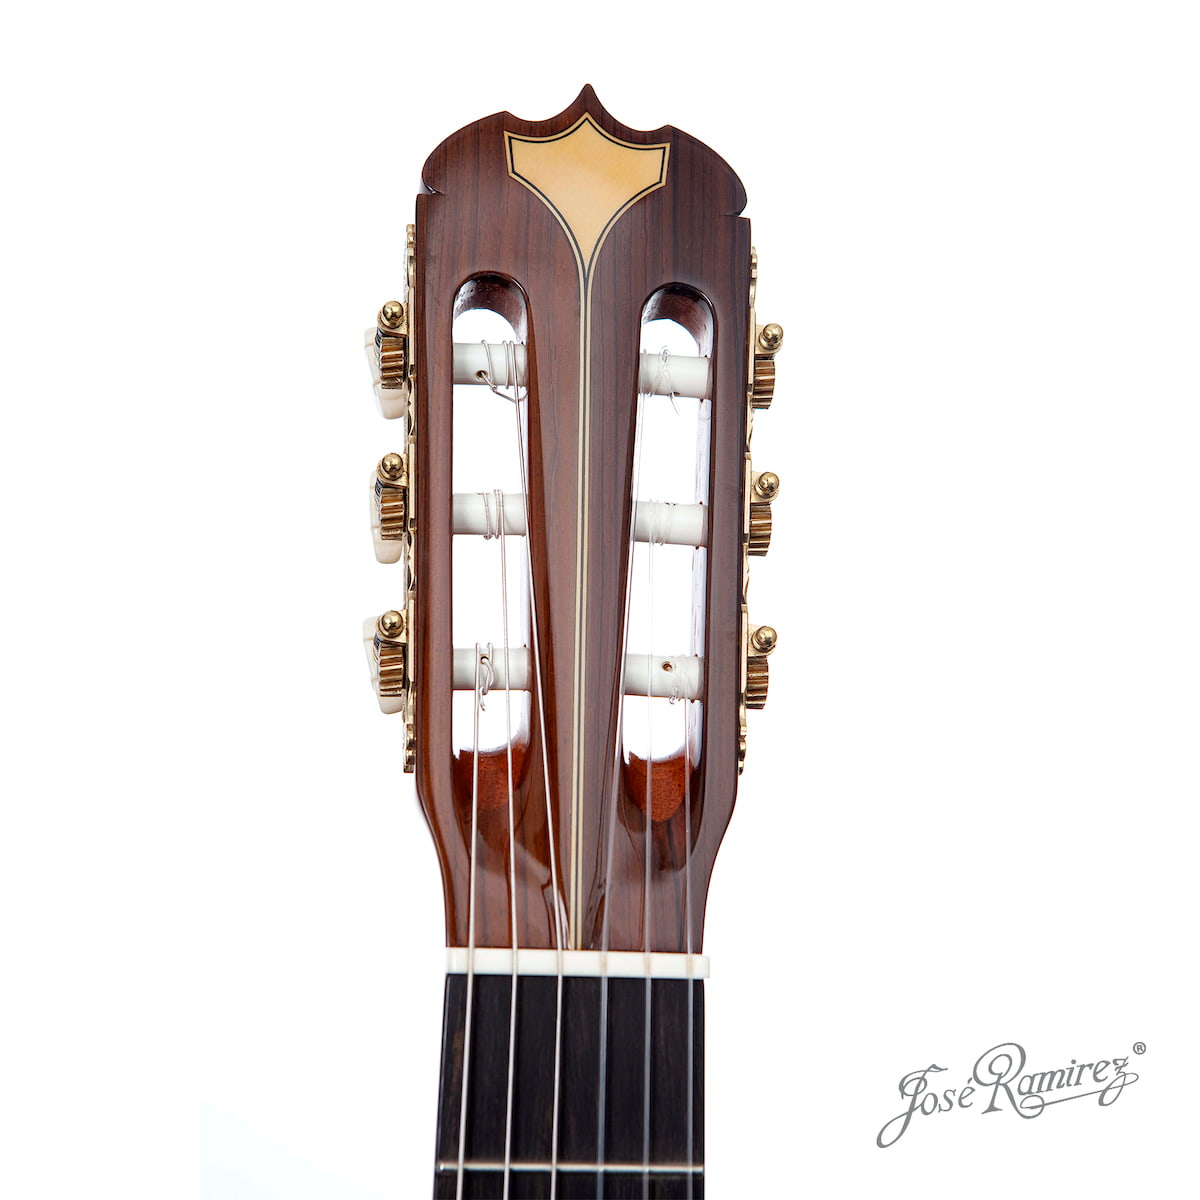 Centenario handcrafted guitar headstock.